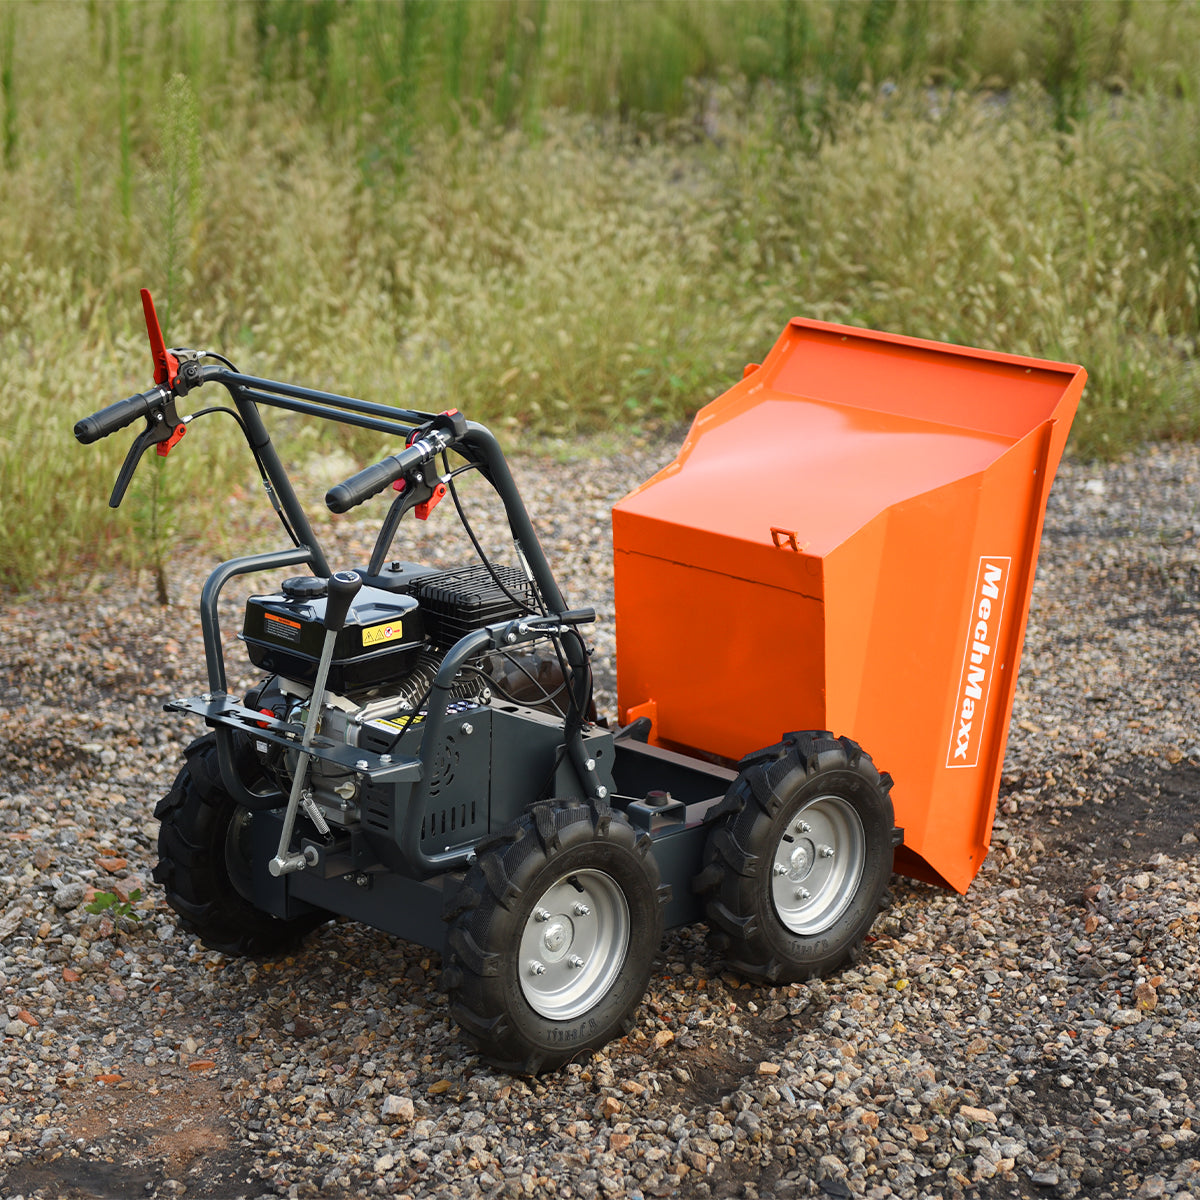 660lbs Capacity 7HP Gas Powered Wheelbarrow  Cart T30 3F+1R Gearbox